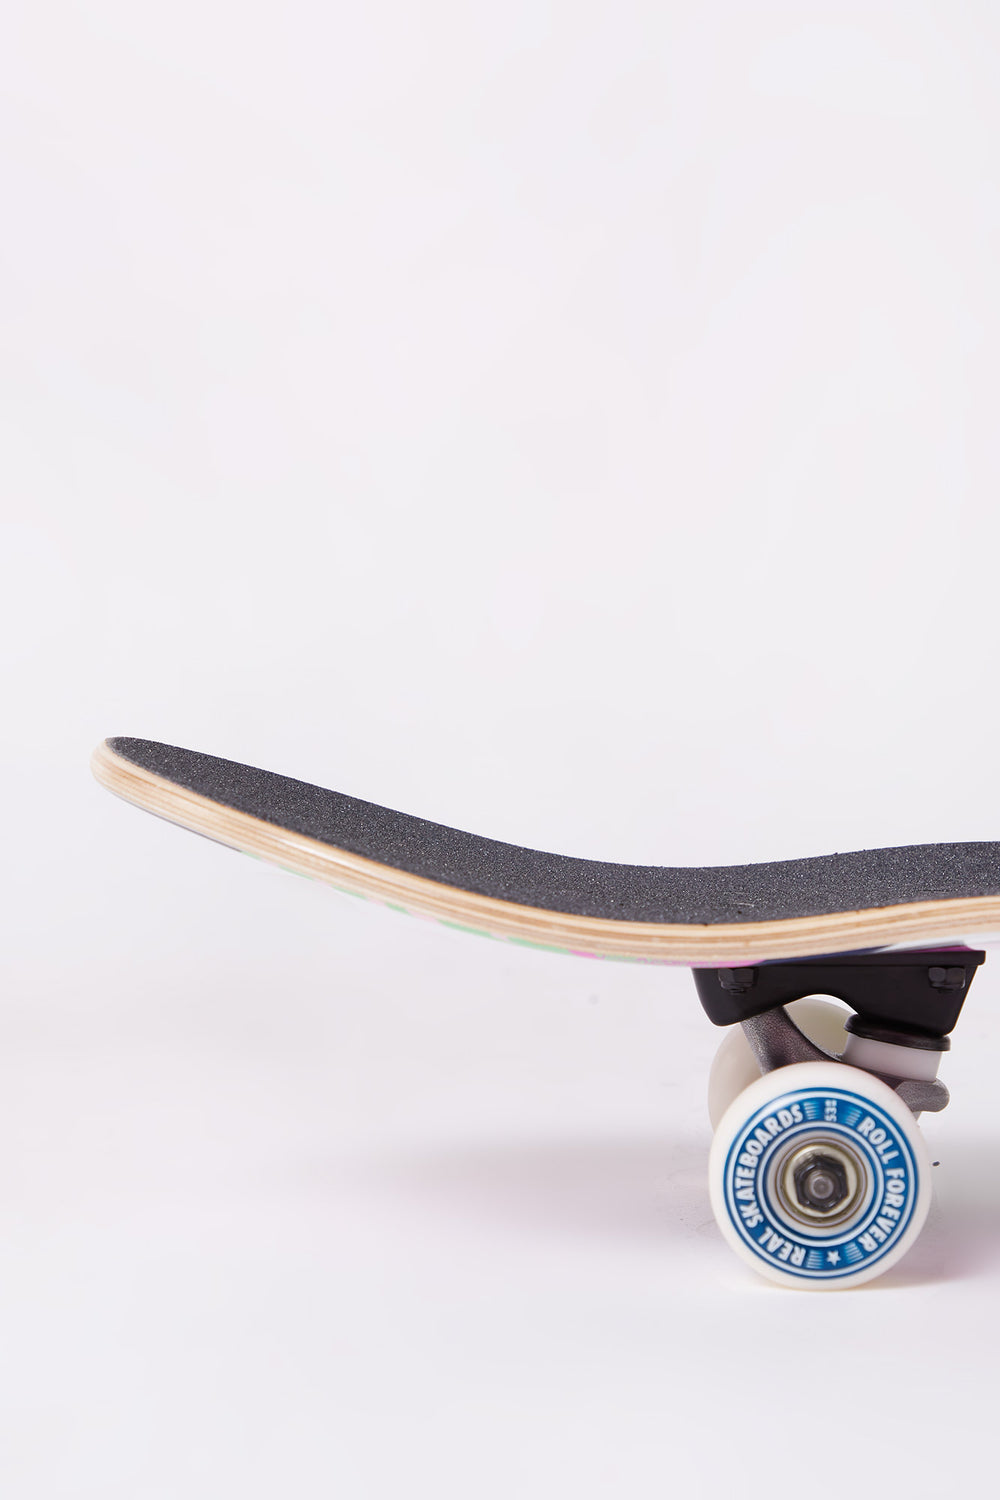 Real Outrun Oval Skateboard 8